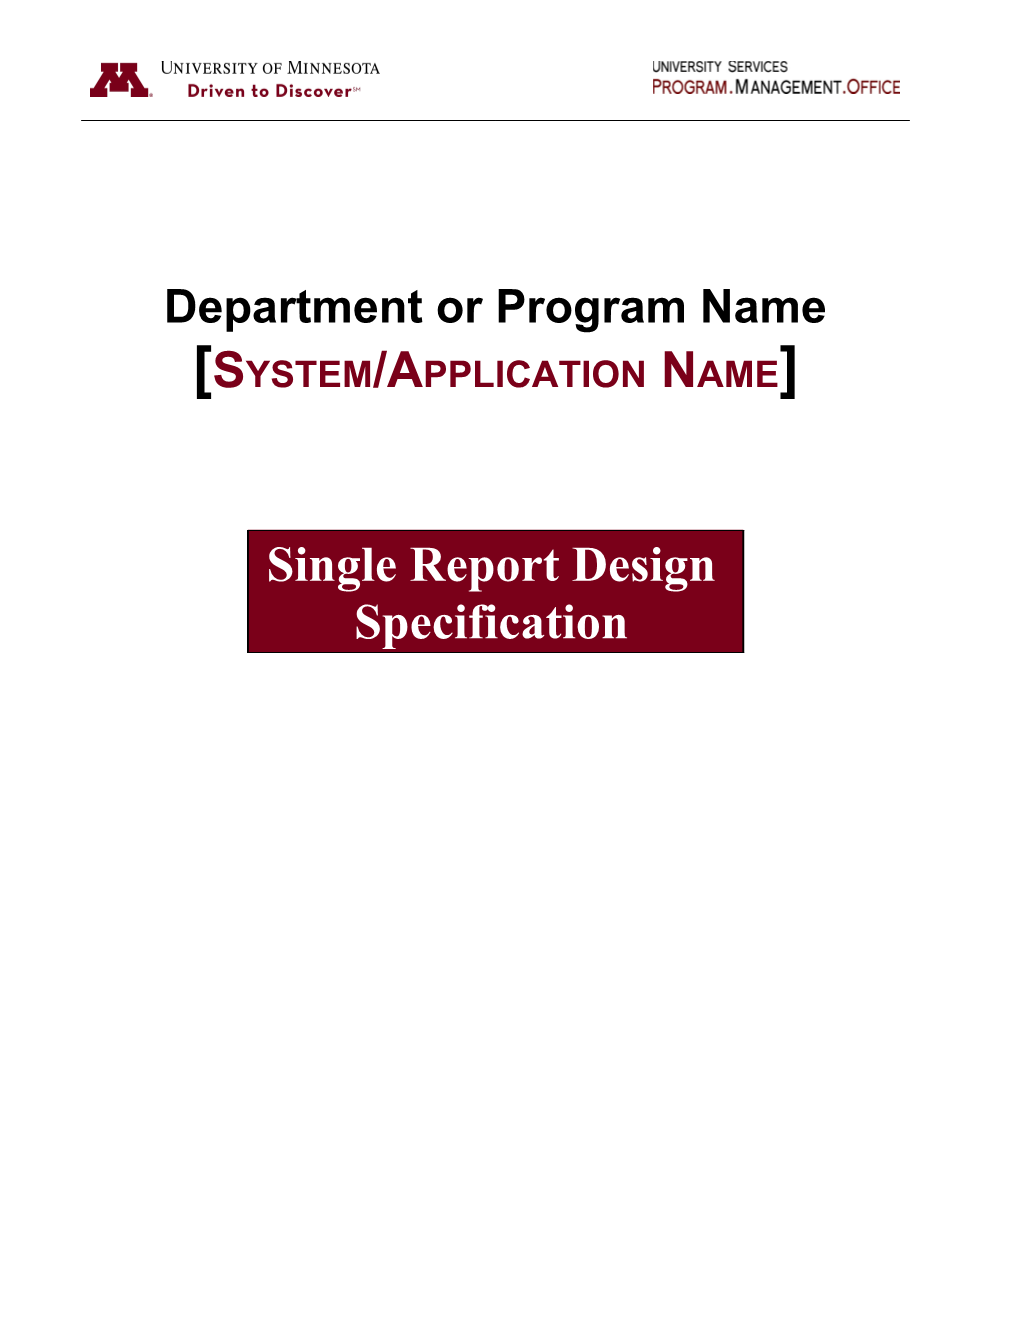 Report Design Specification